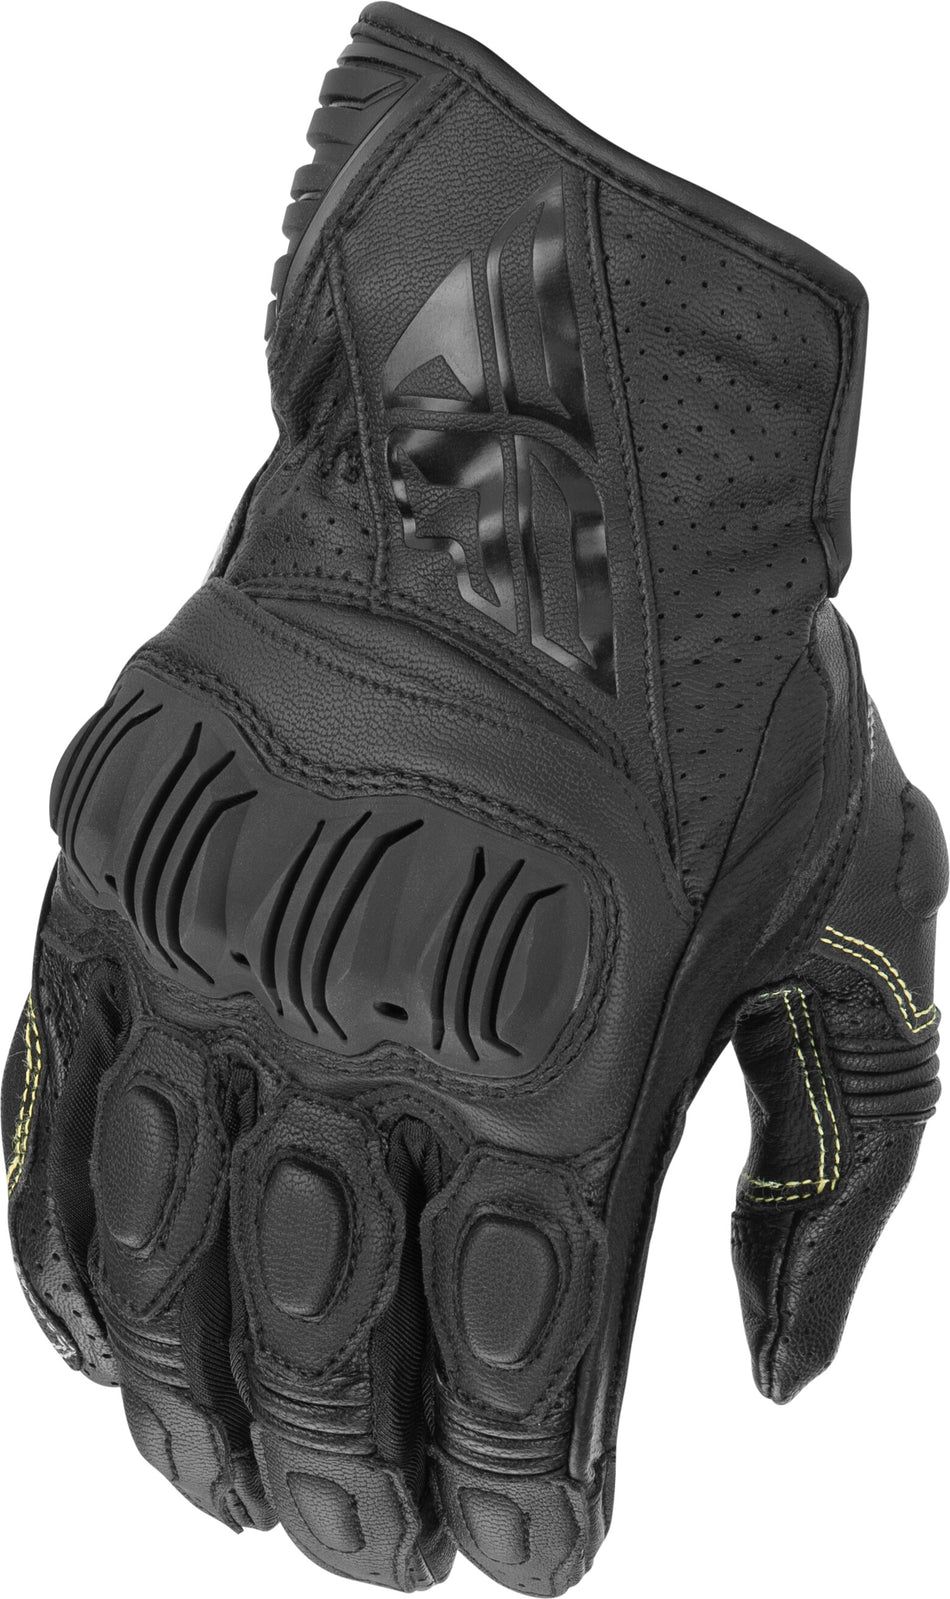 FLY RACING Brawler Gloves Black 2x 476-20902X